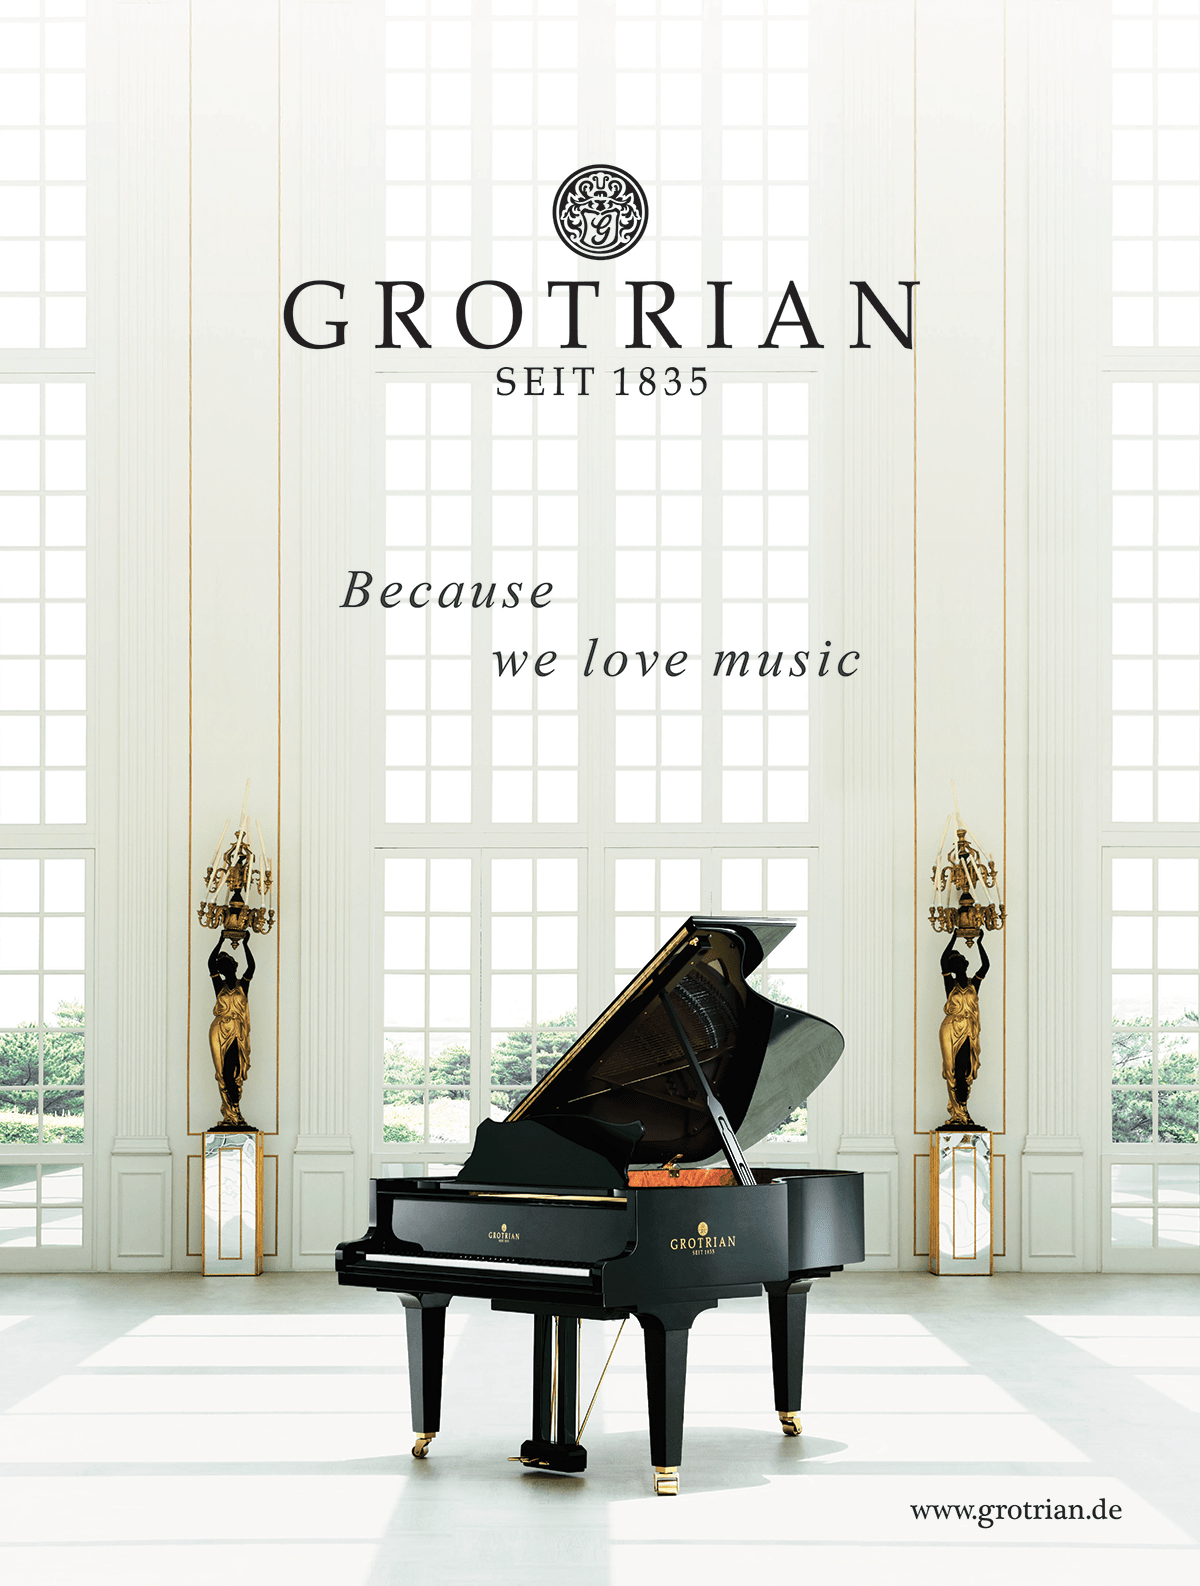 Grotrian Because we love music.